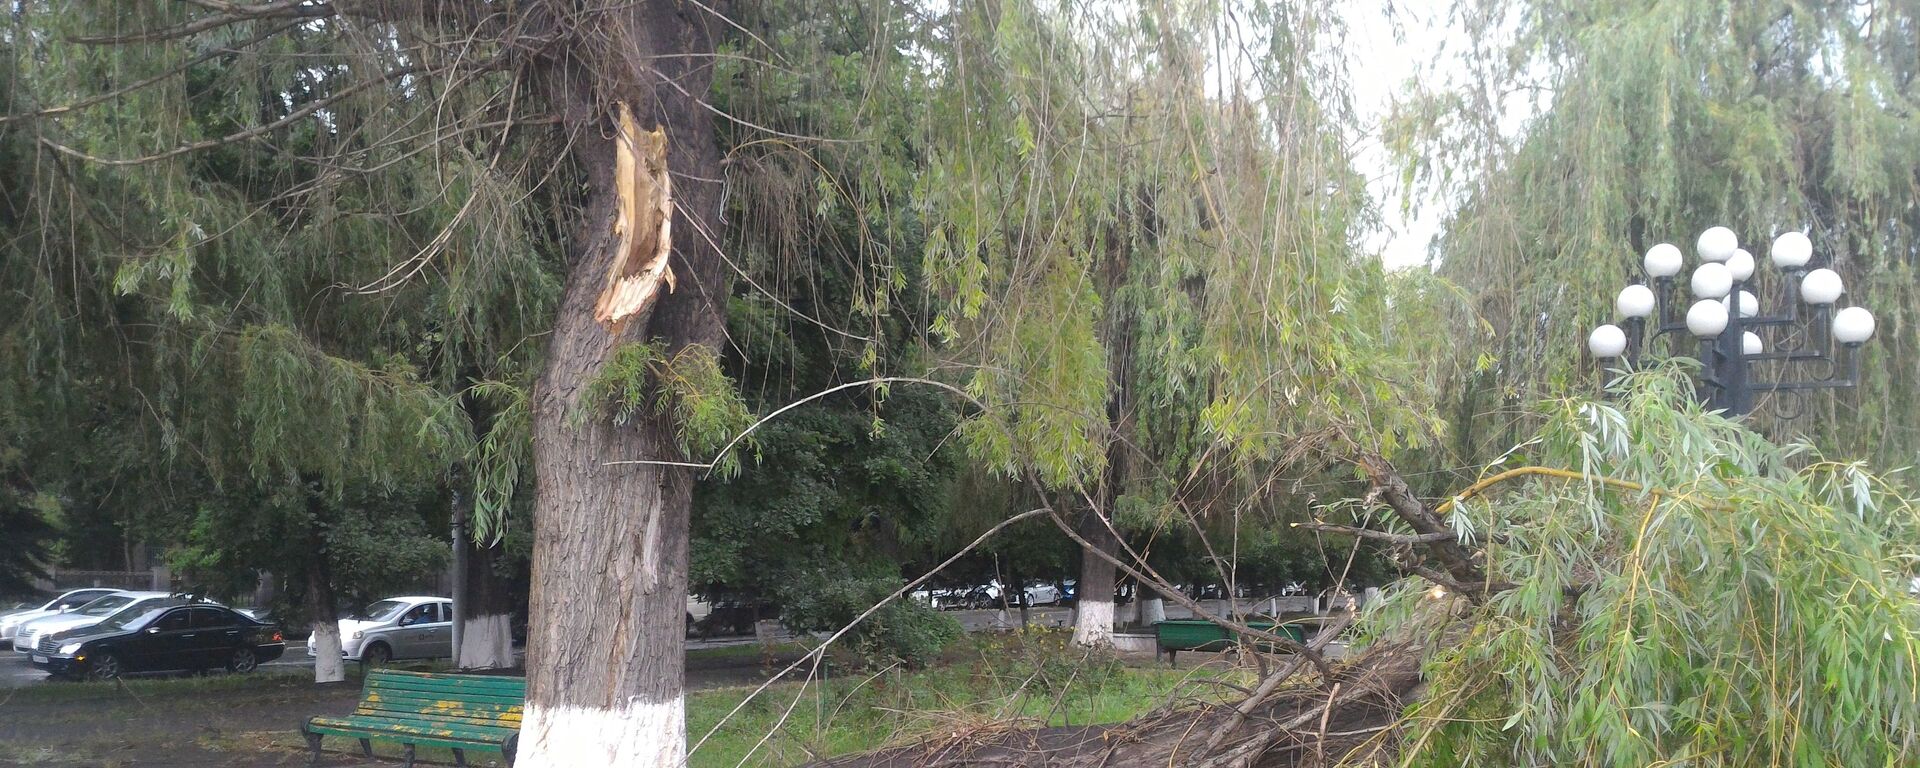 Сильный ветер в Ереване повалил деревья - Sputnik Արմենիա, 1920, 03.04.2018